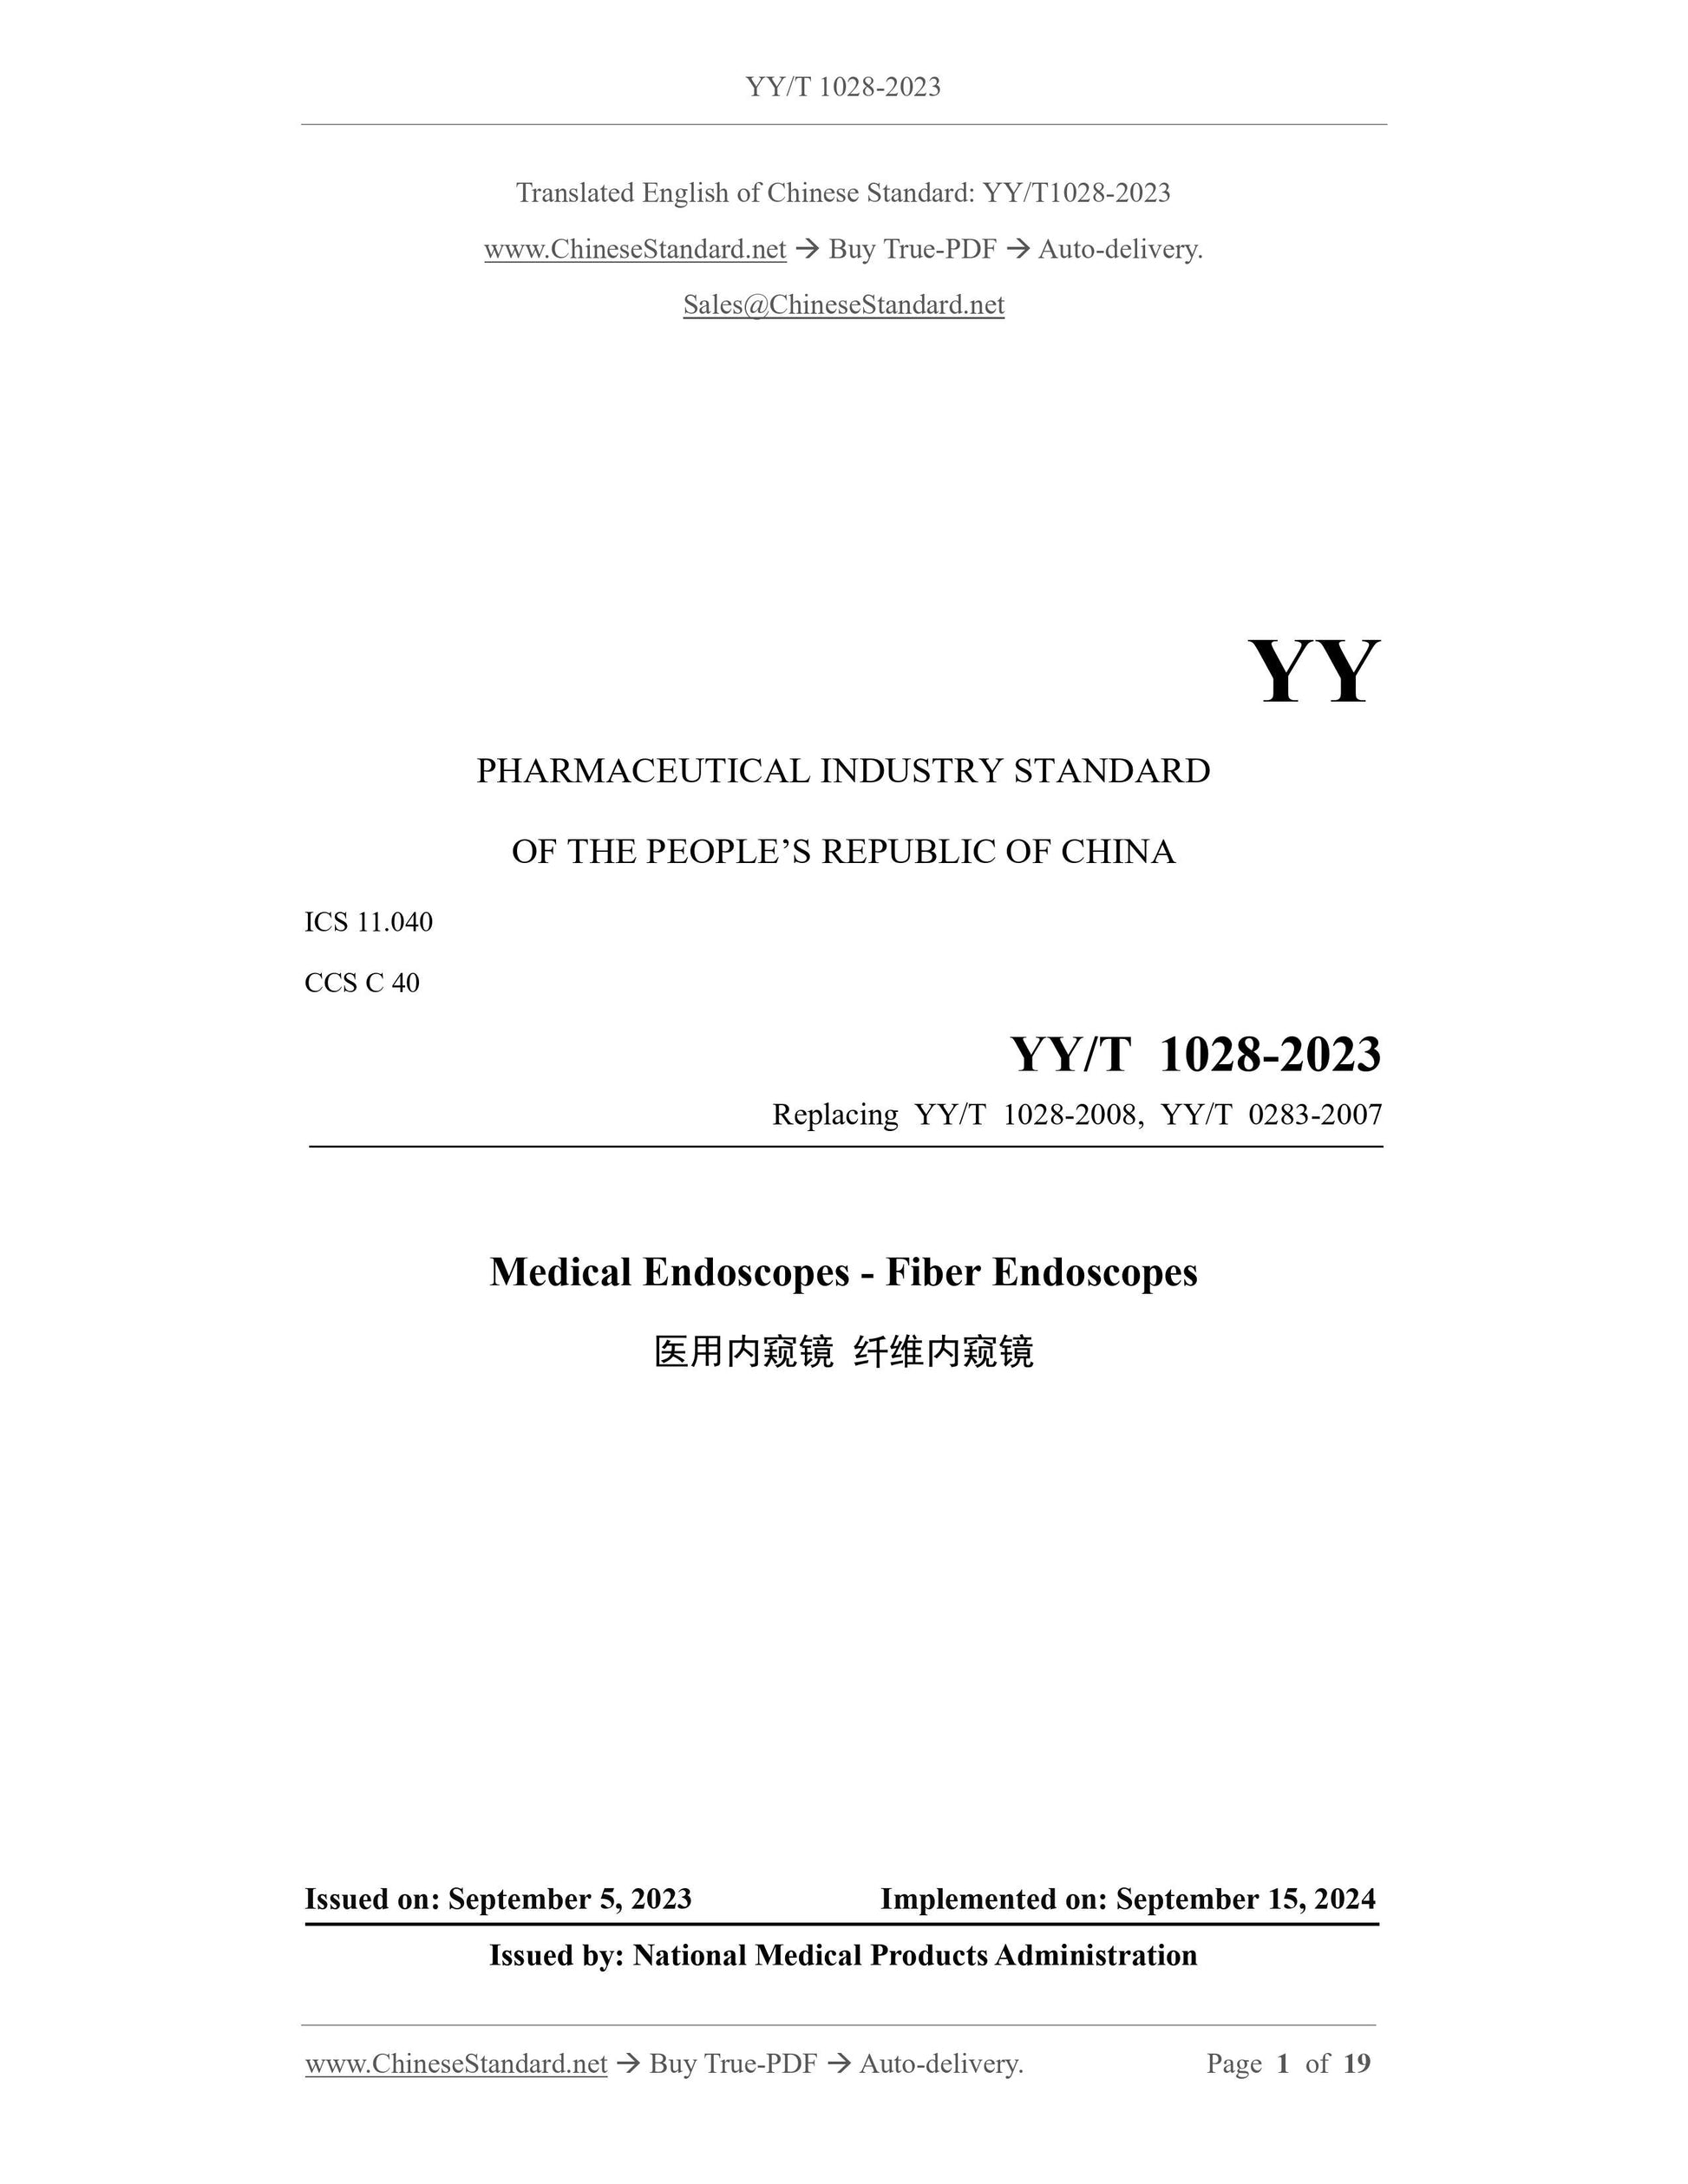 YY/T 1028-2023 Page 1